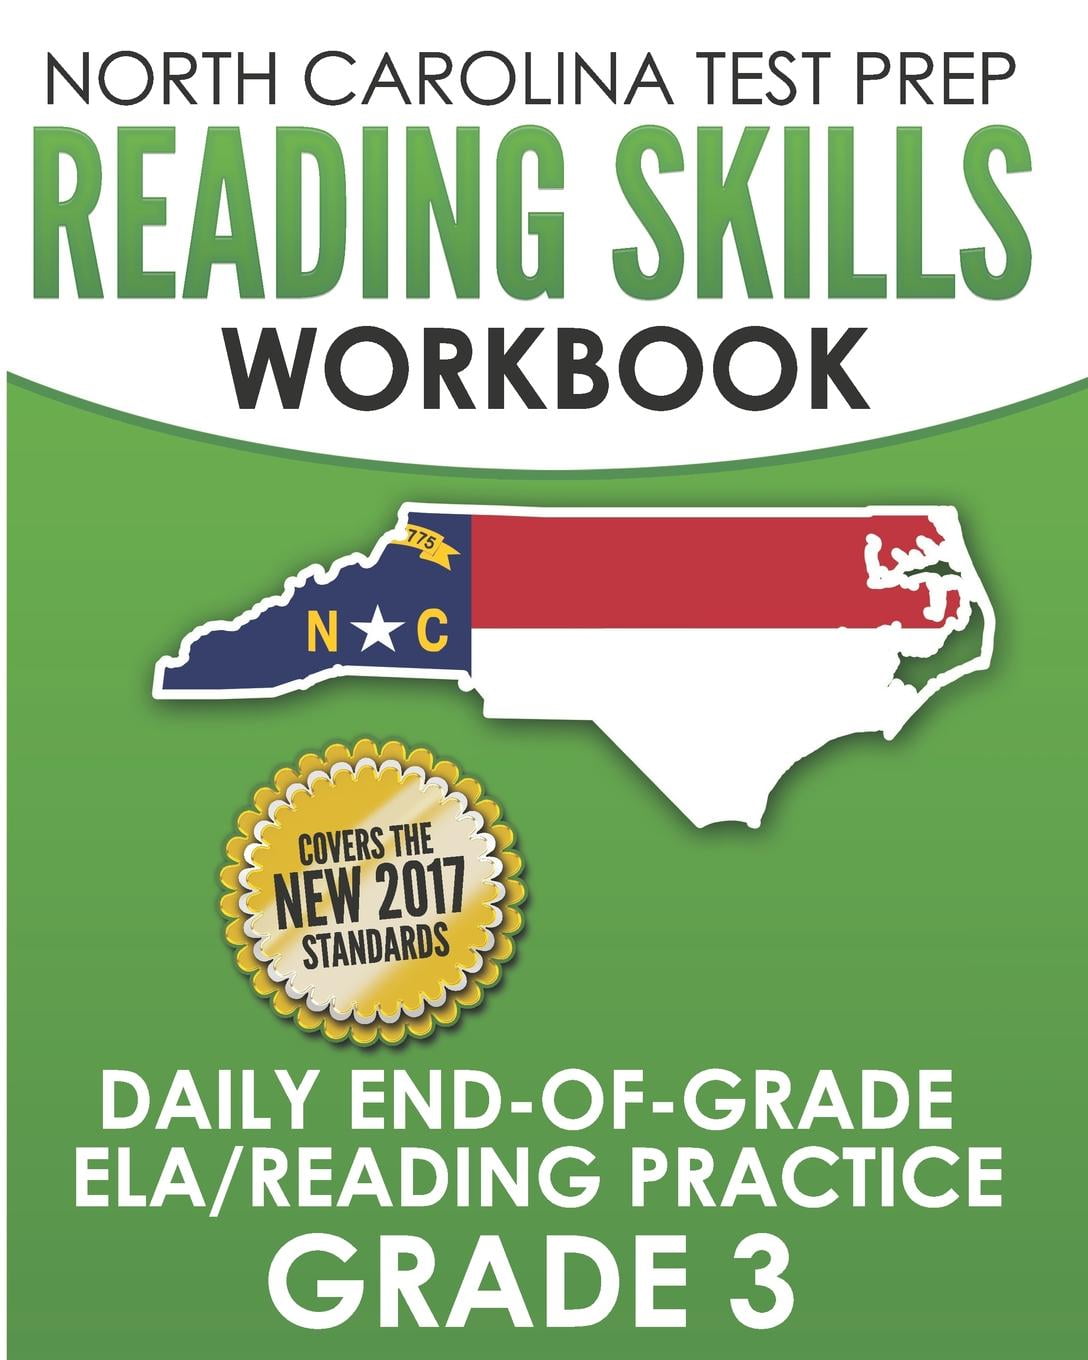 North Carolina Test Prep Reading Skills Workbook Daily End Of Grade Ela Reading Practice Grade 3 Preparation For The Eog English Language Arts Reading Tests Paperback Walmart Com